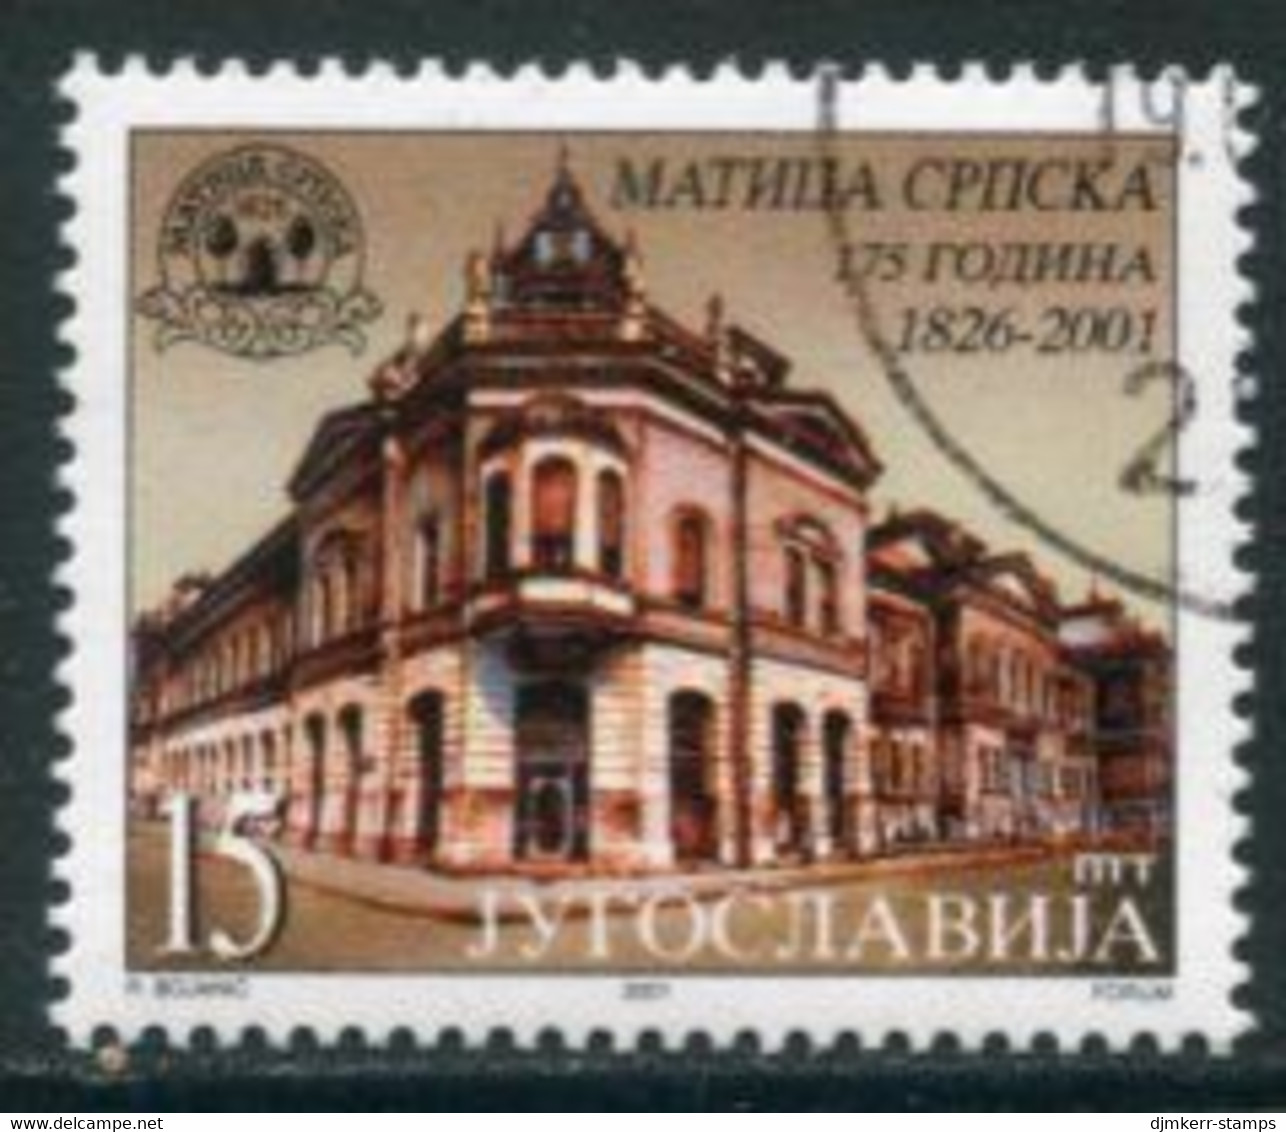 YUGOSLAVIA 2001 Matica Srpska Literary Association Used.  Michel 3012 - Gebraucht